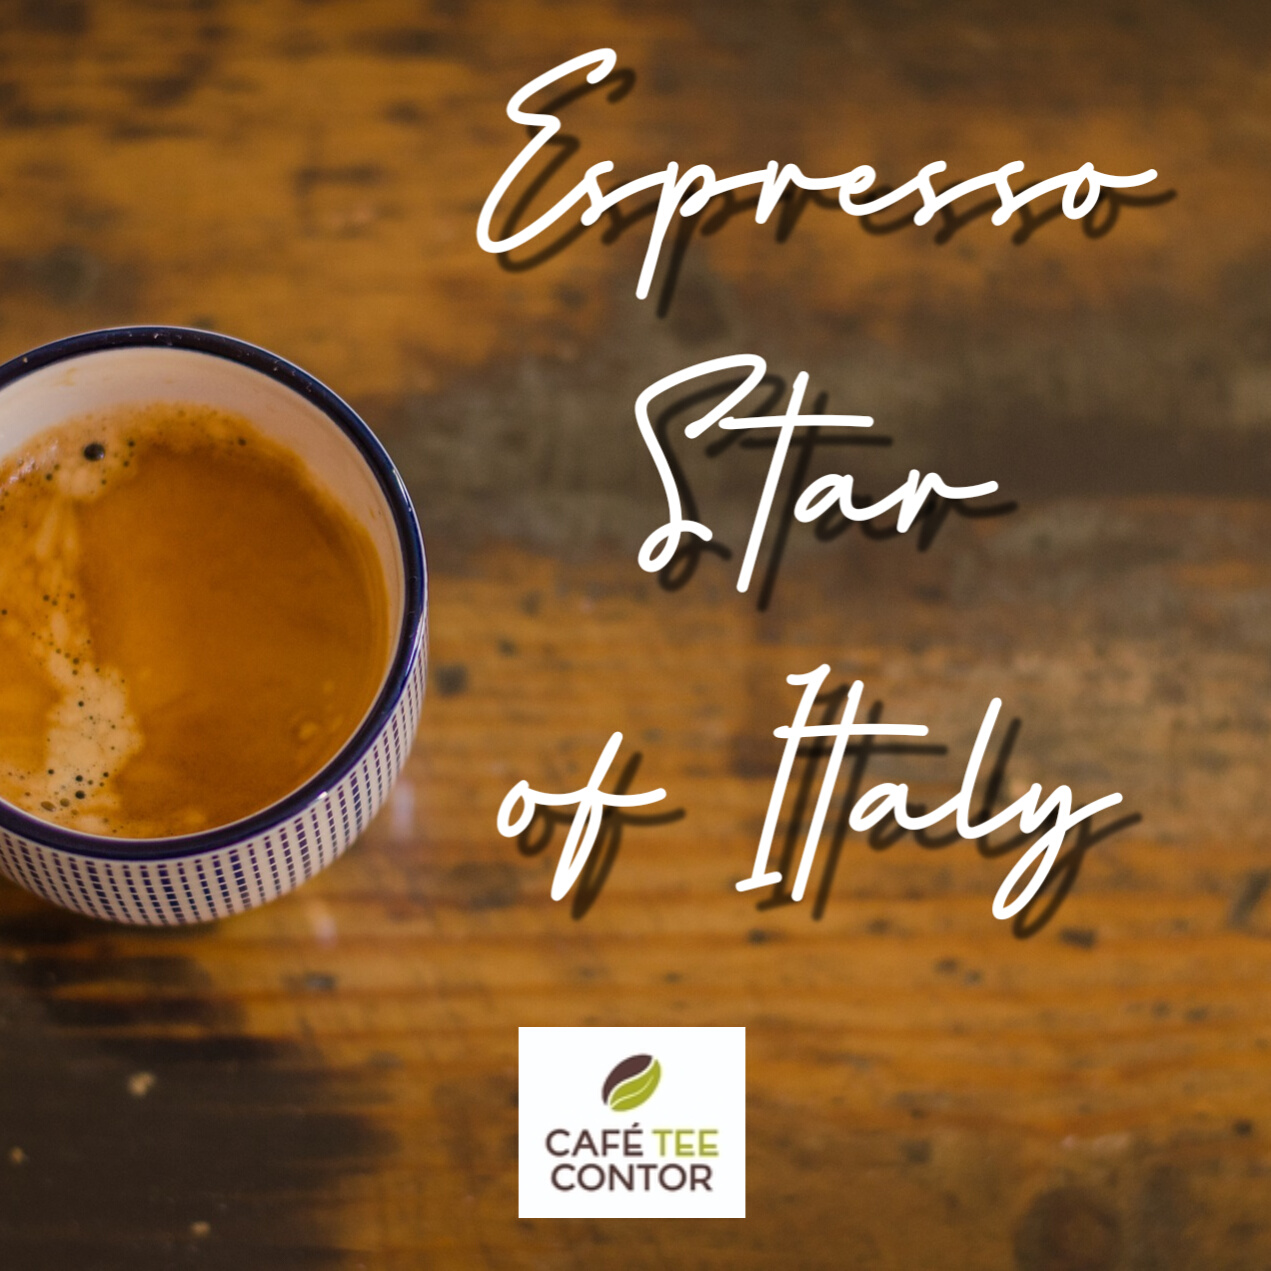 Espresso Star of Italy